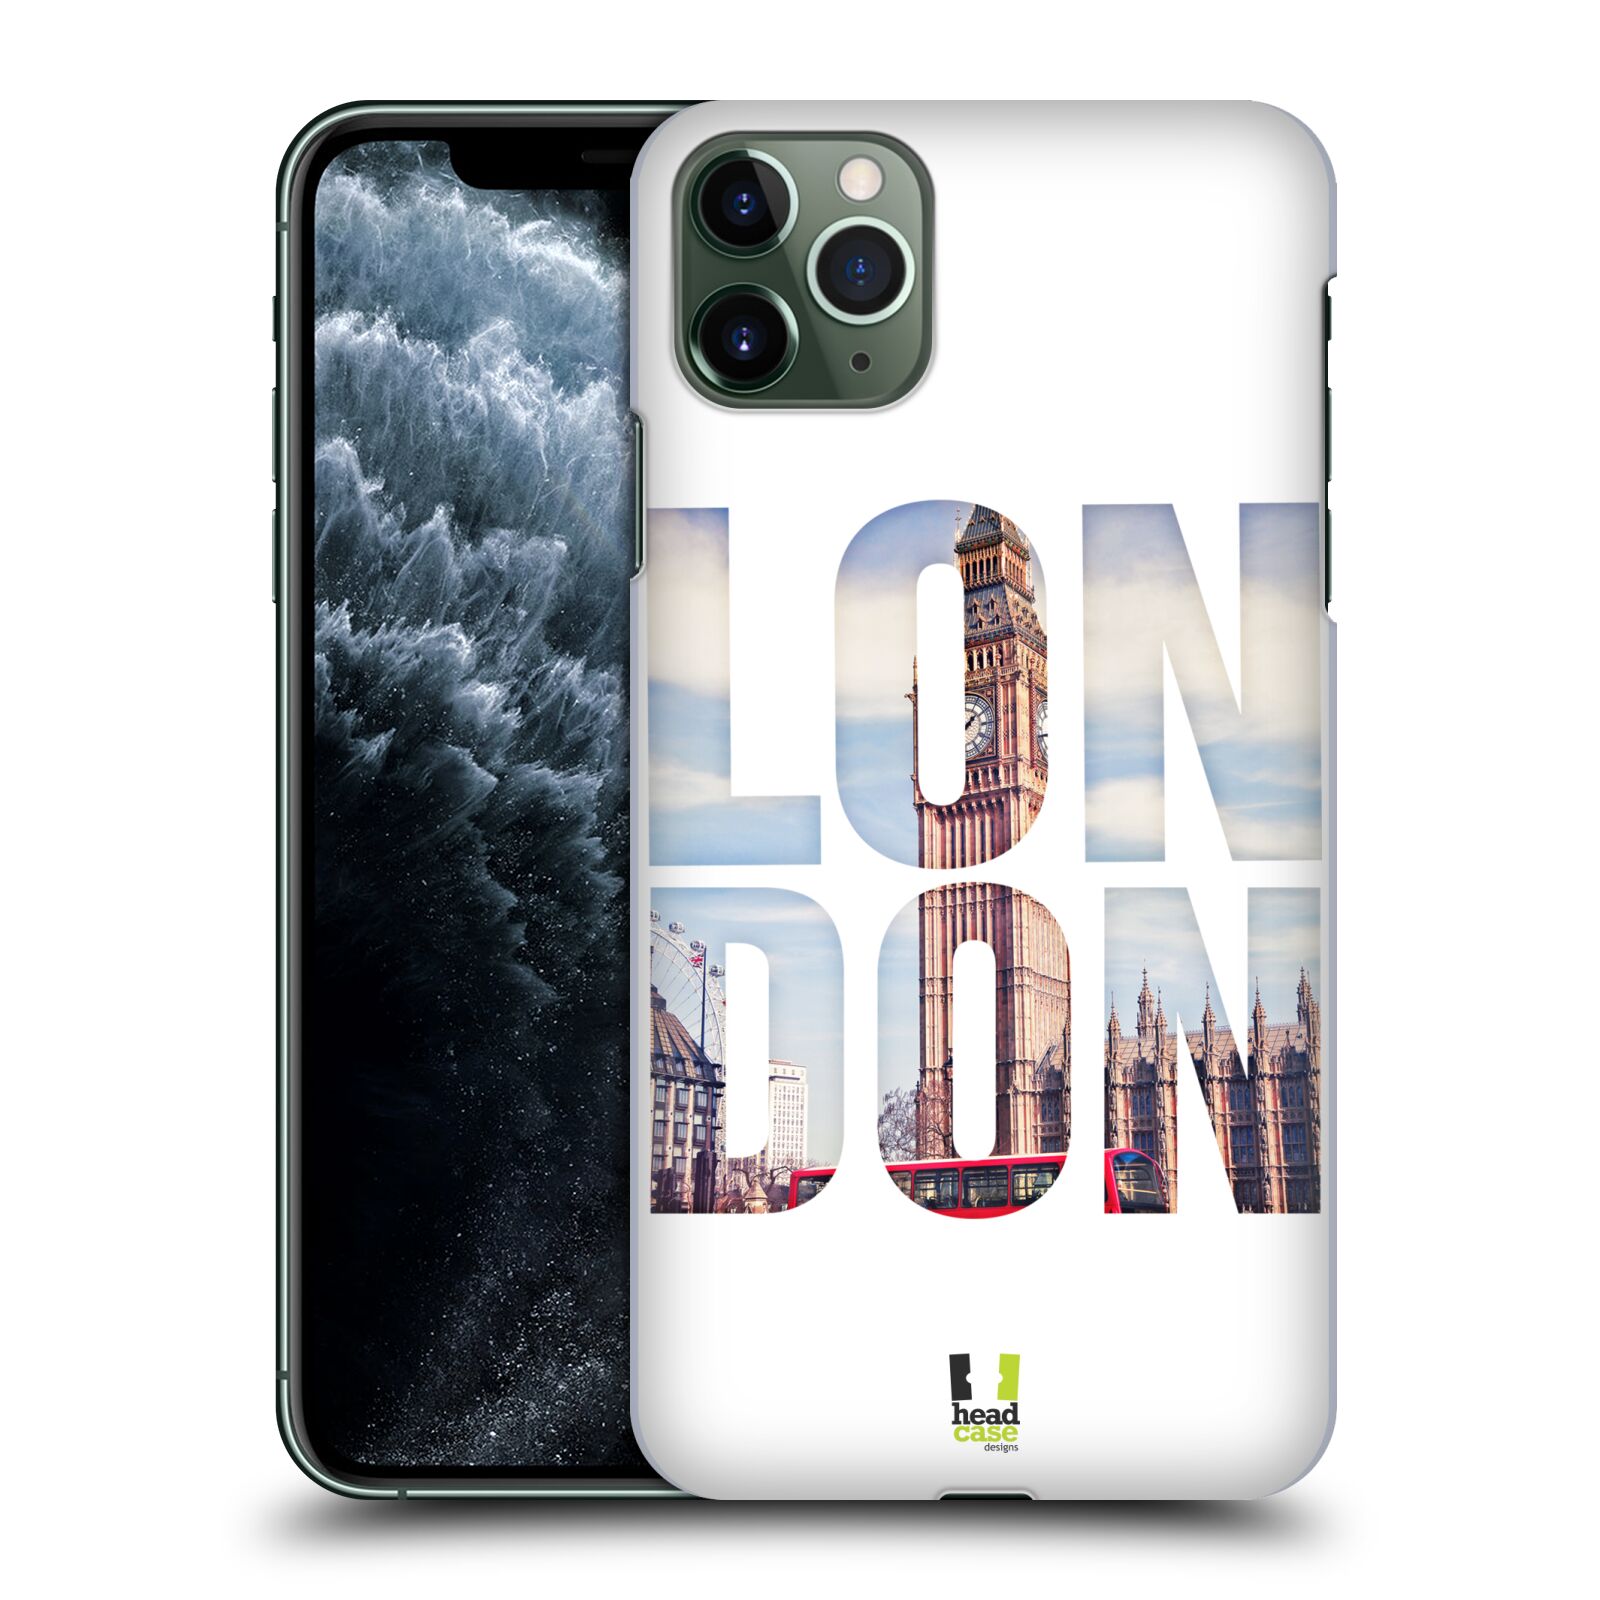 Pouzdro na mobil Apple Iphone 11 PRO MAX - HEAD CASE - vzor Města foto a nadpis ANGLIE, LONDÝN, BIG BEN